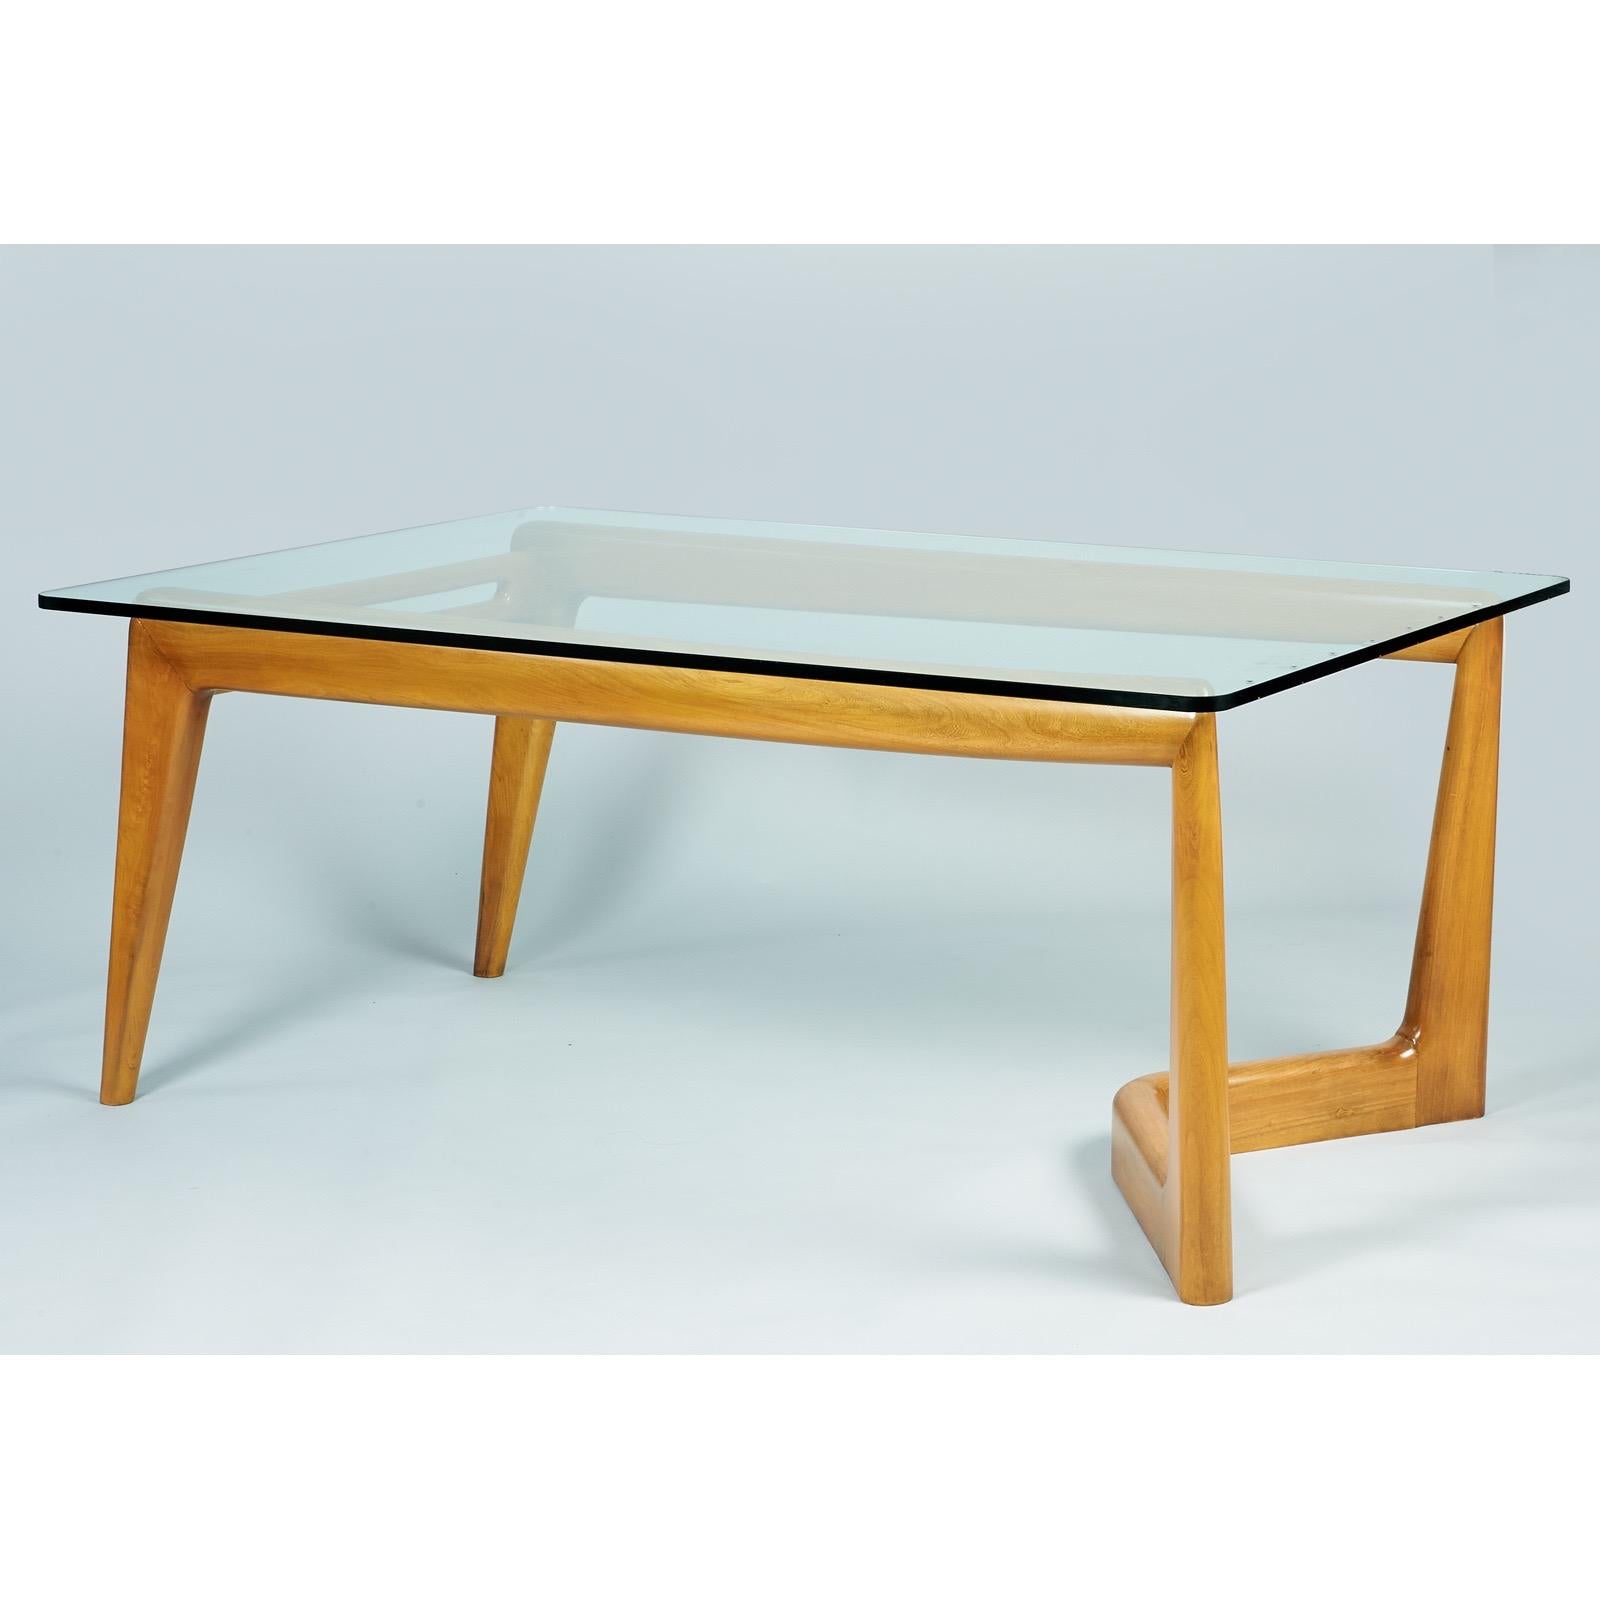 Mid-Century Modern Pierluigi Giordani Monumental Biomorphic Dining Table, Wood + Glass, Italy 1950s For Sale